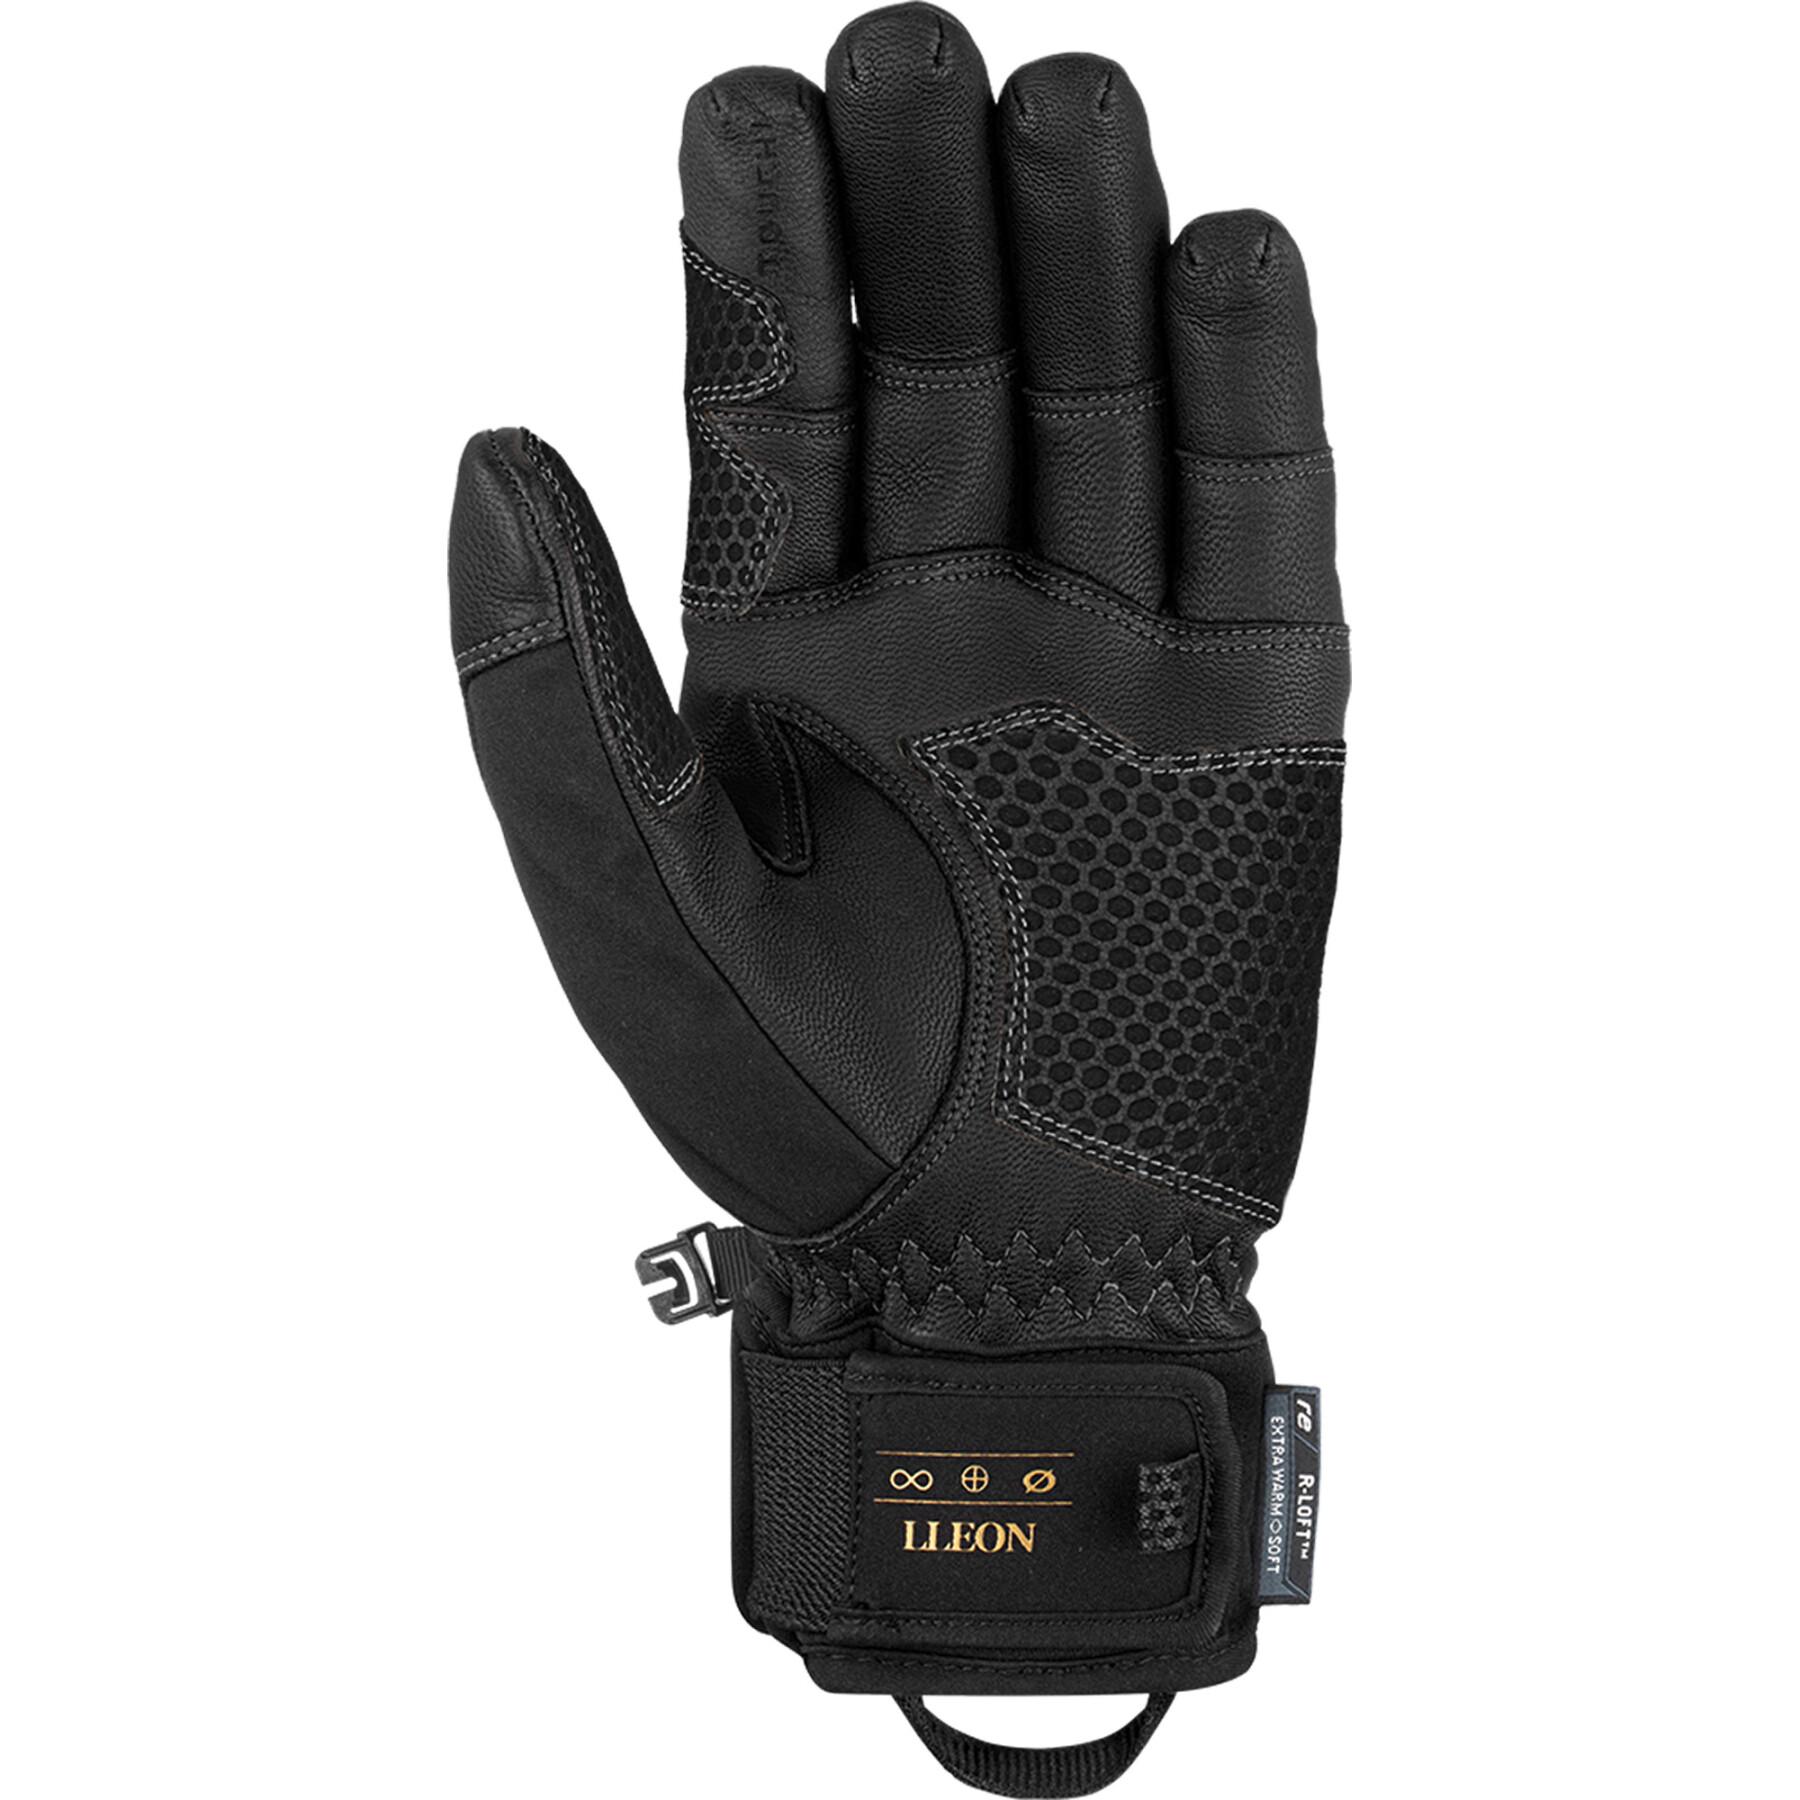 Handschuhe Reusch Lleon R-TEX® XT - Handschuhe - Zubehör - Wintersport